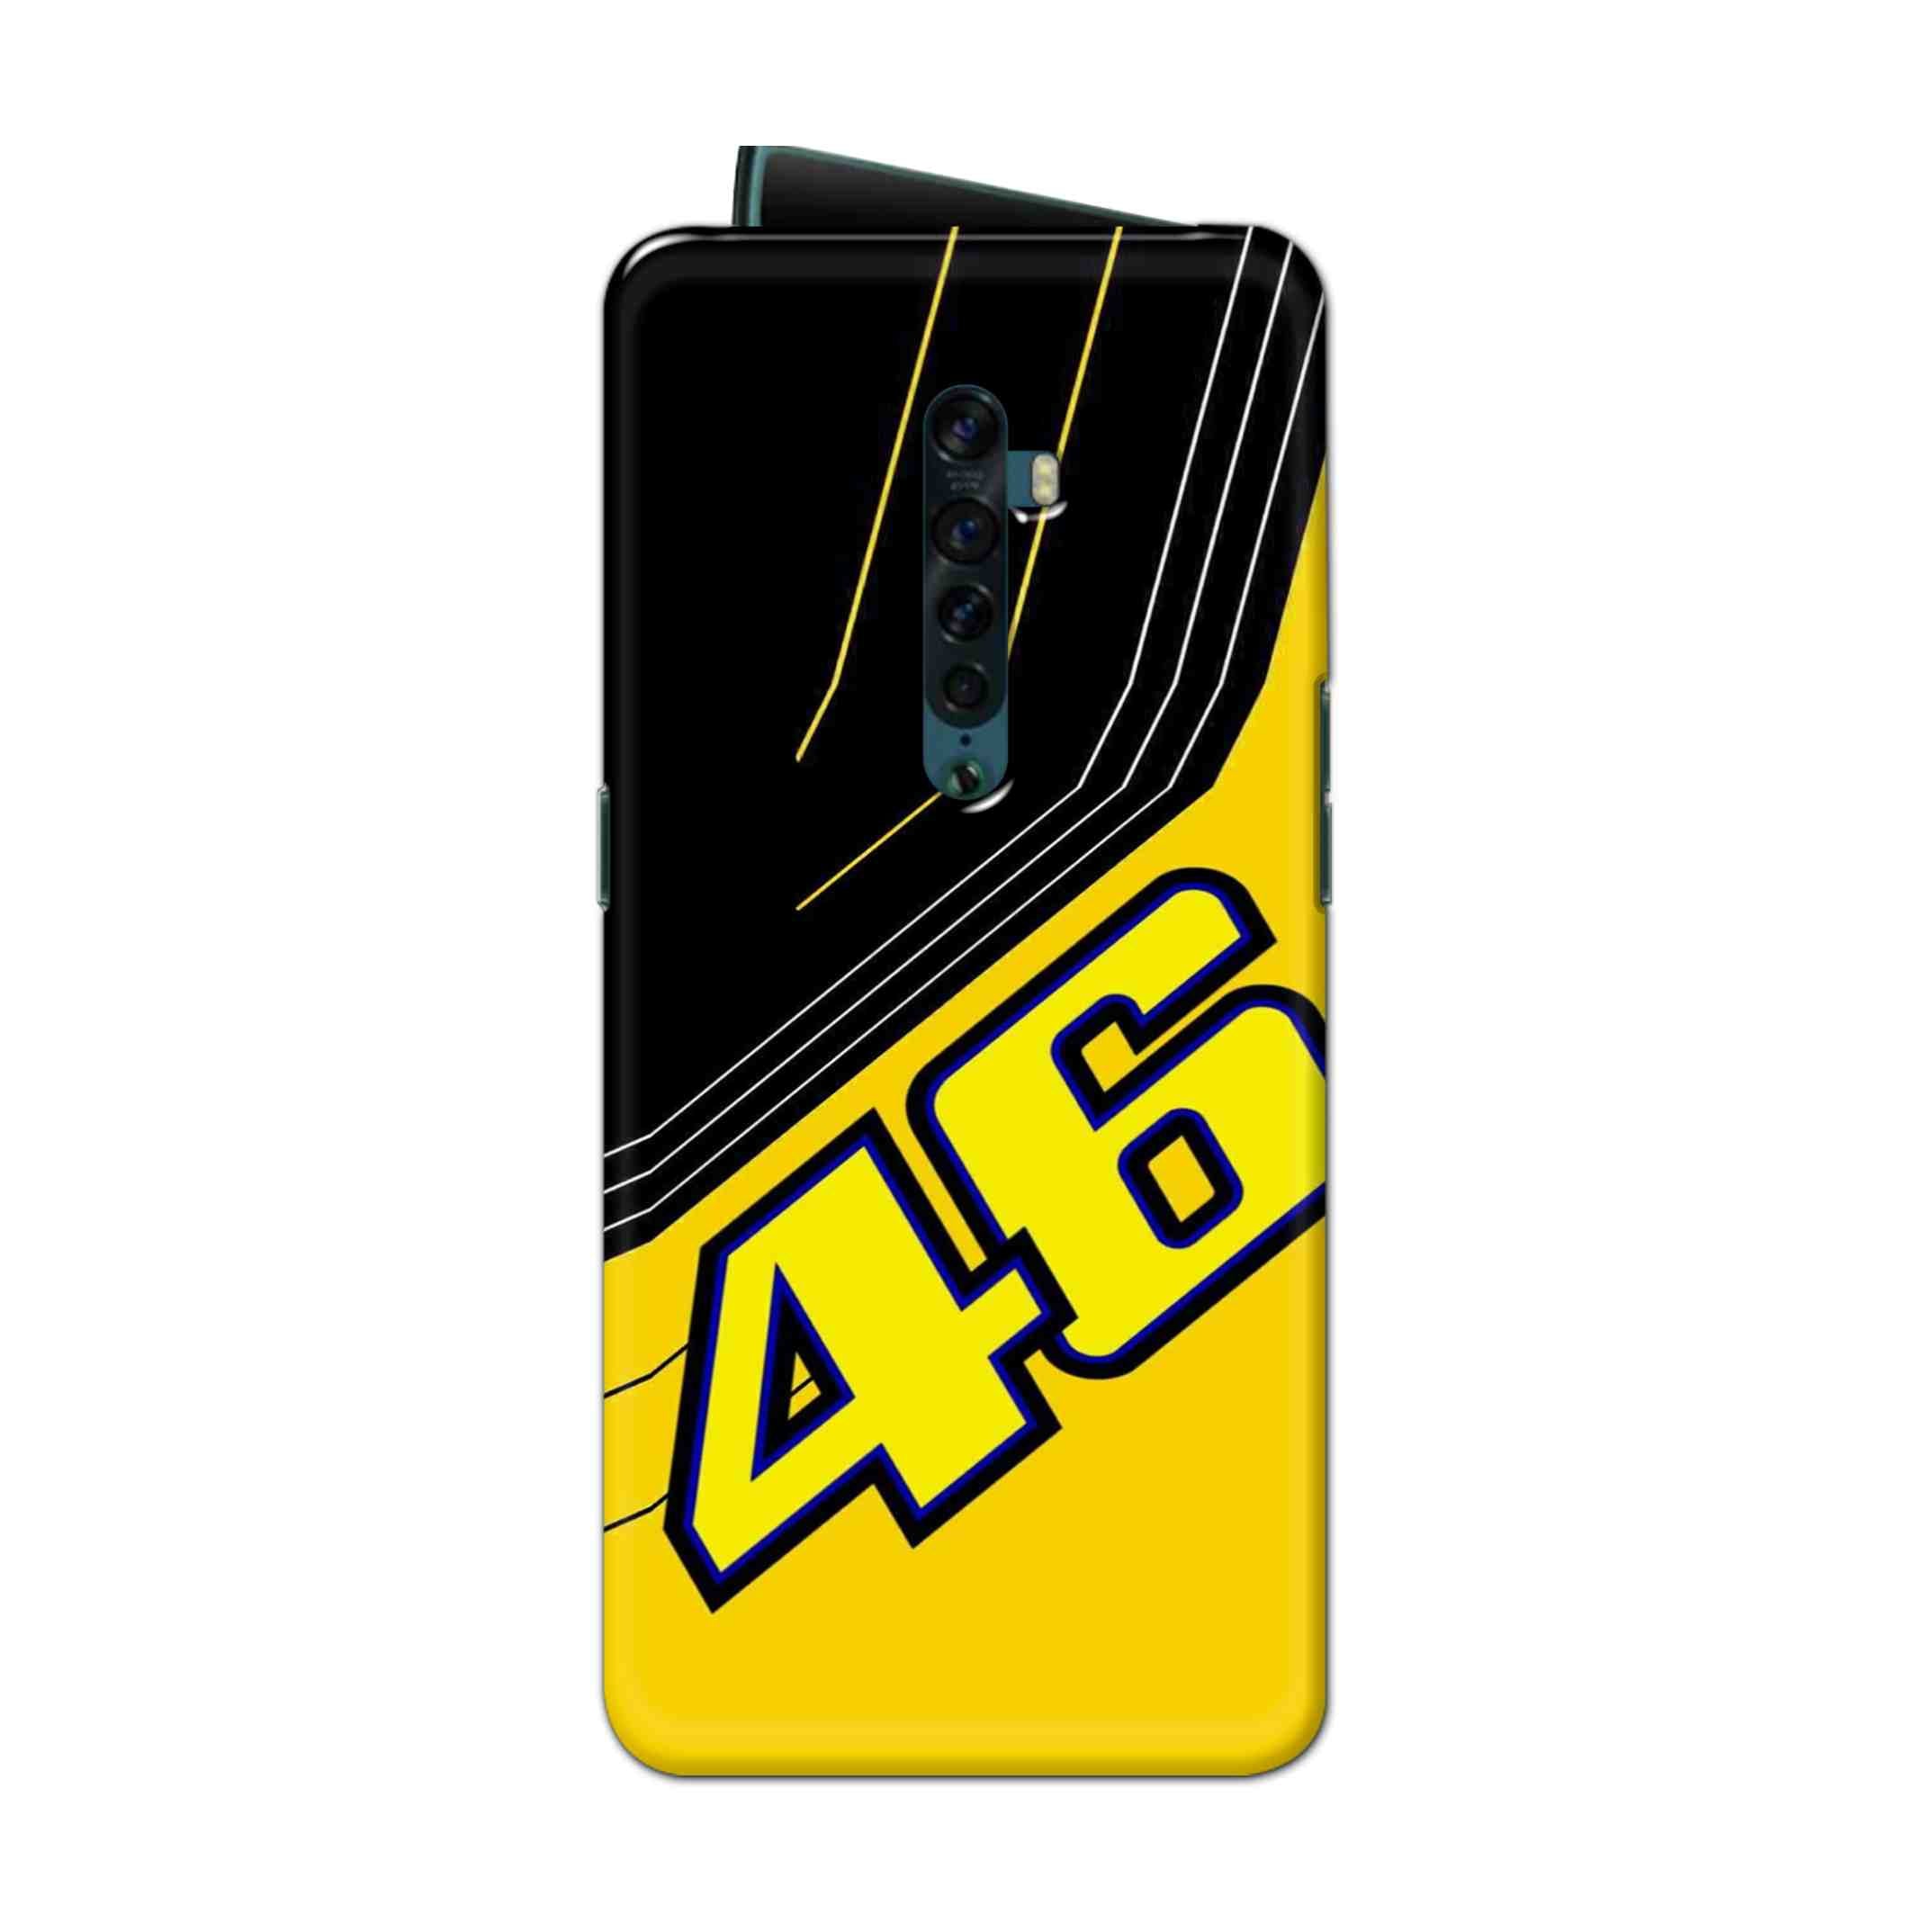 Buy 46 Hard Back Mobile Phone Case Cover For Oppo Reno 2 Online